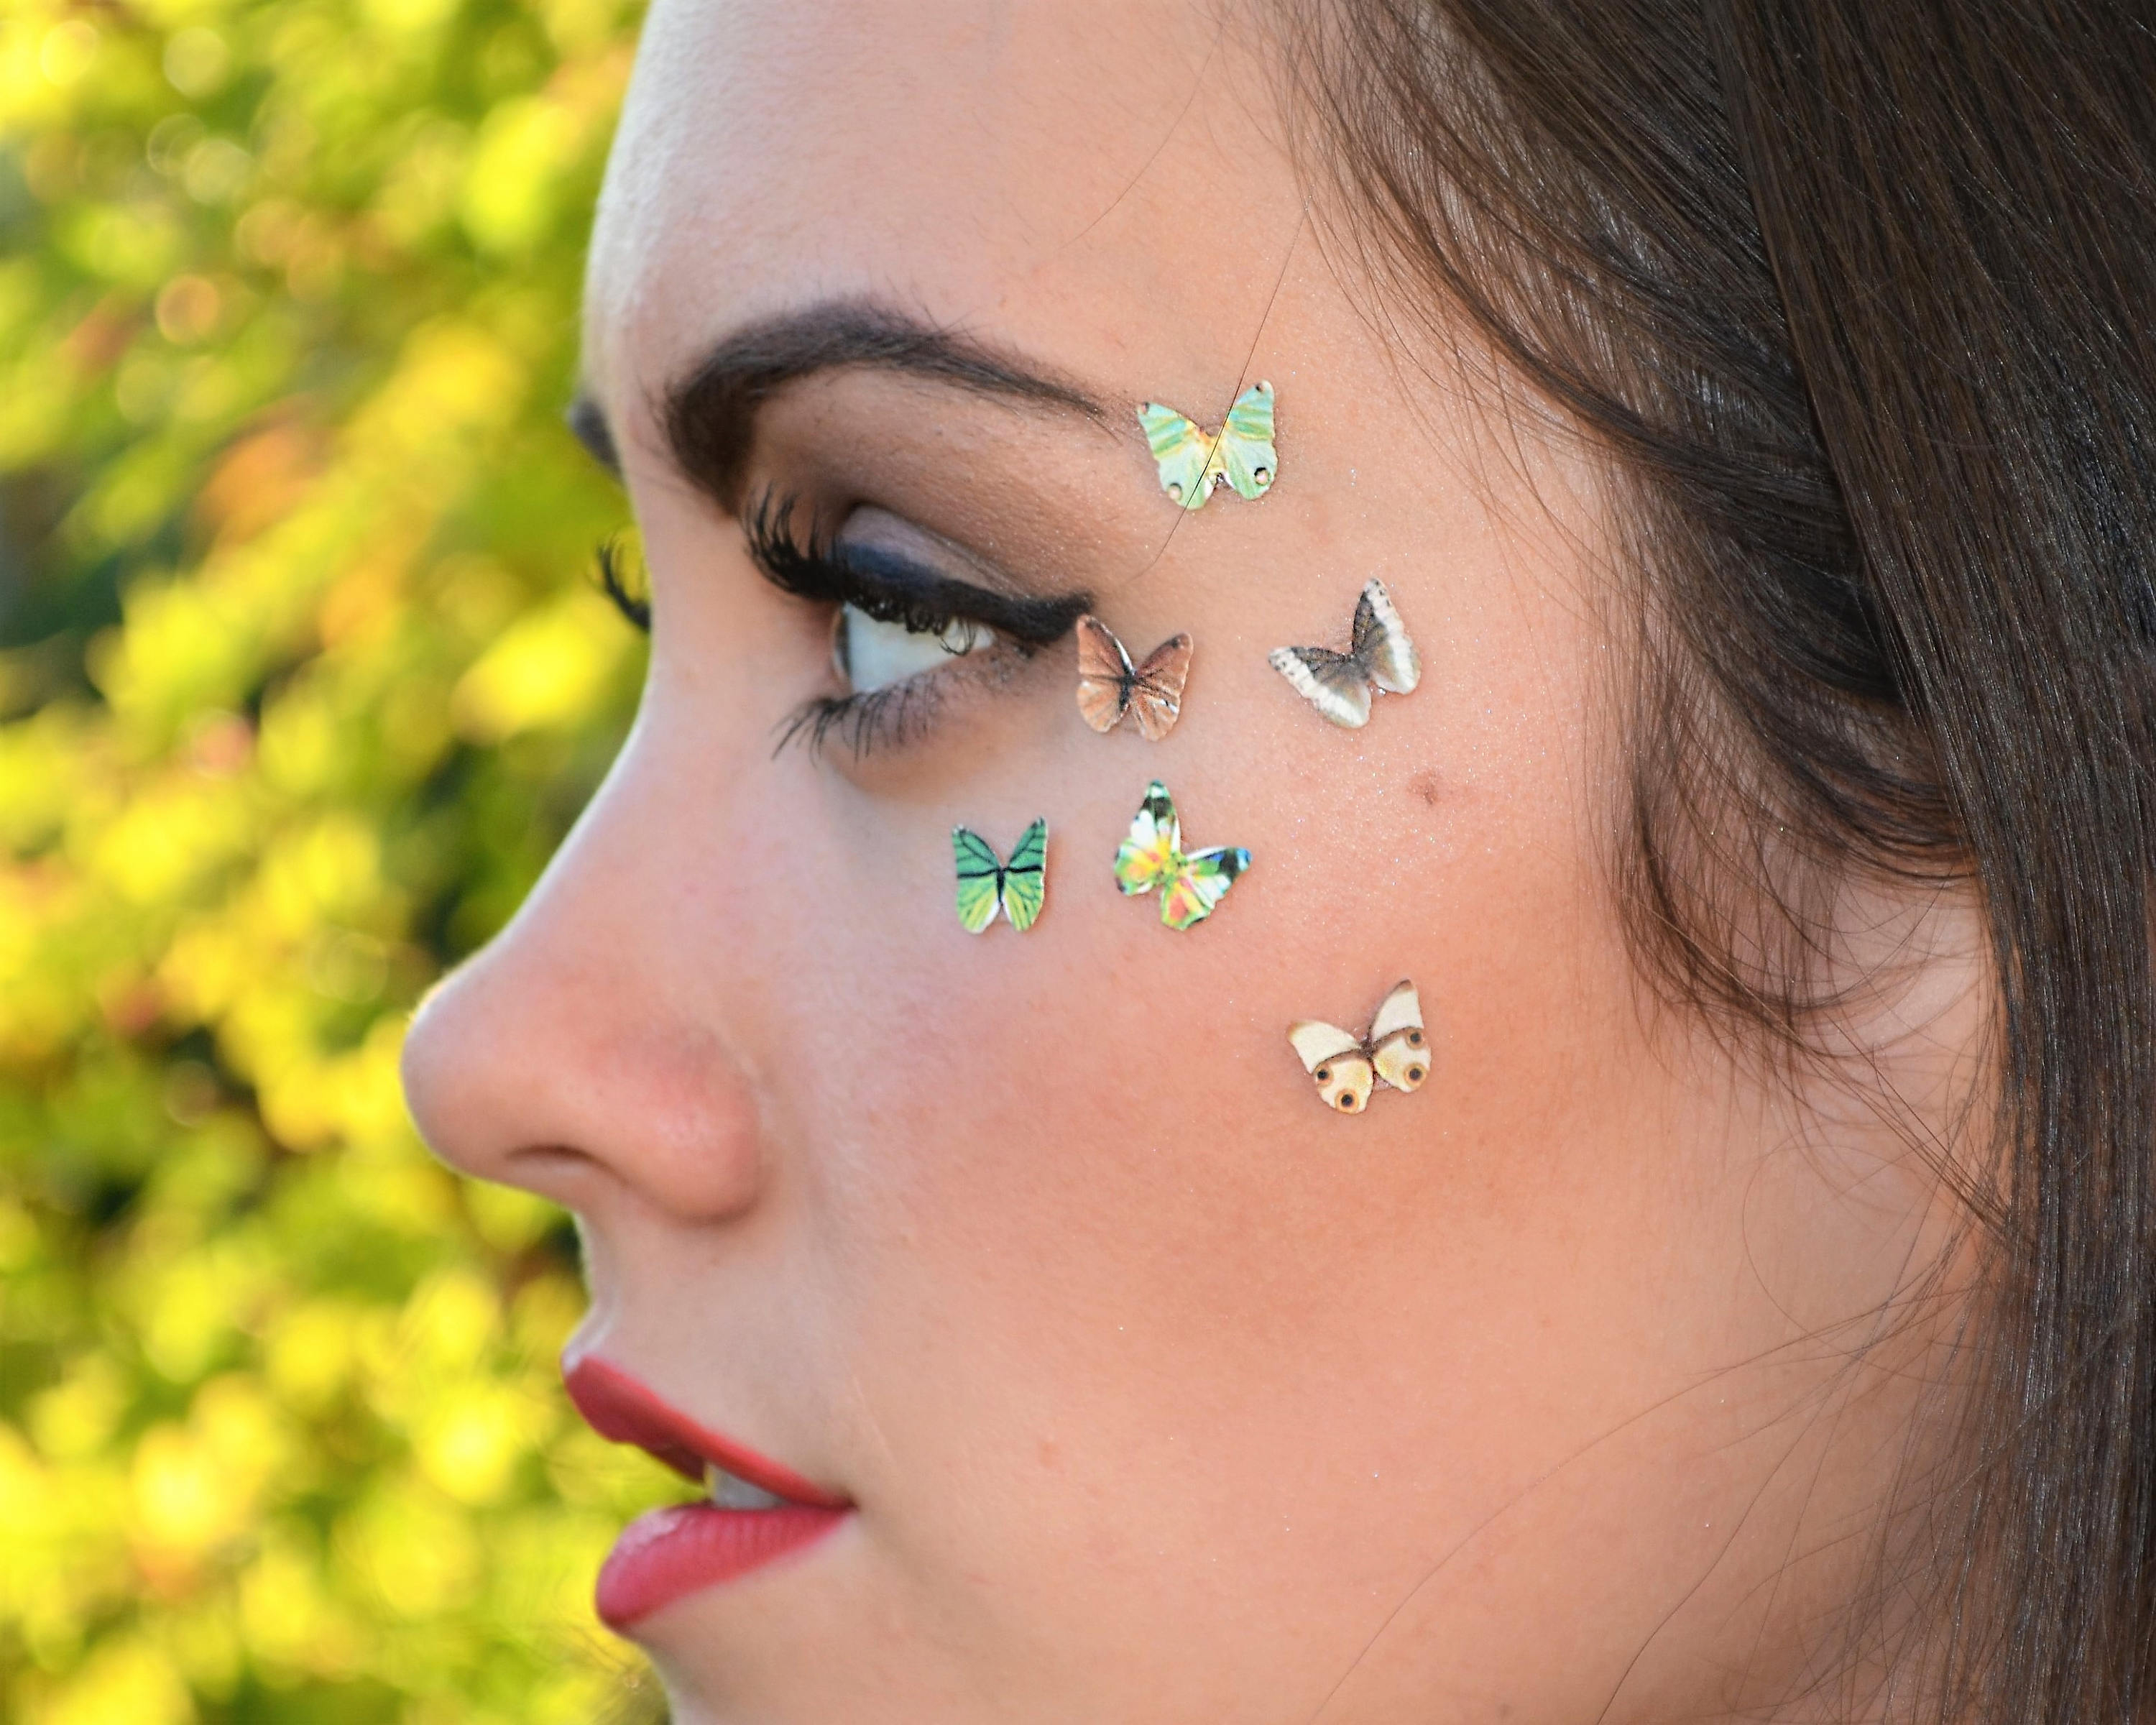 Butterfly Eye Makeup 3pcs Butterfly Eye Makeup Stickers Beauty Product Accessory Etsy